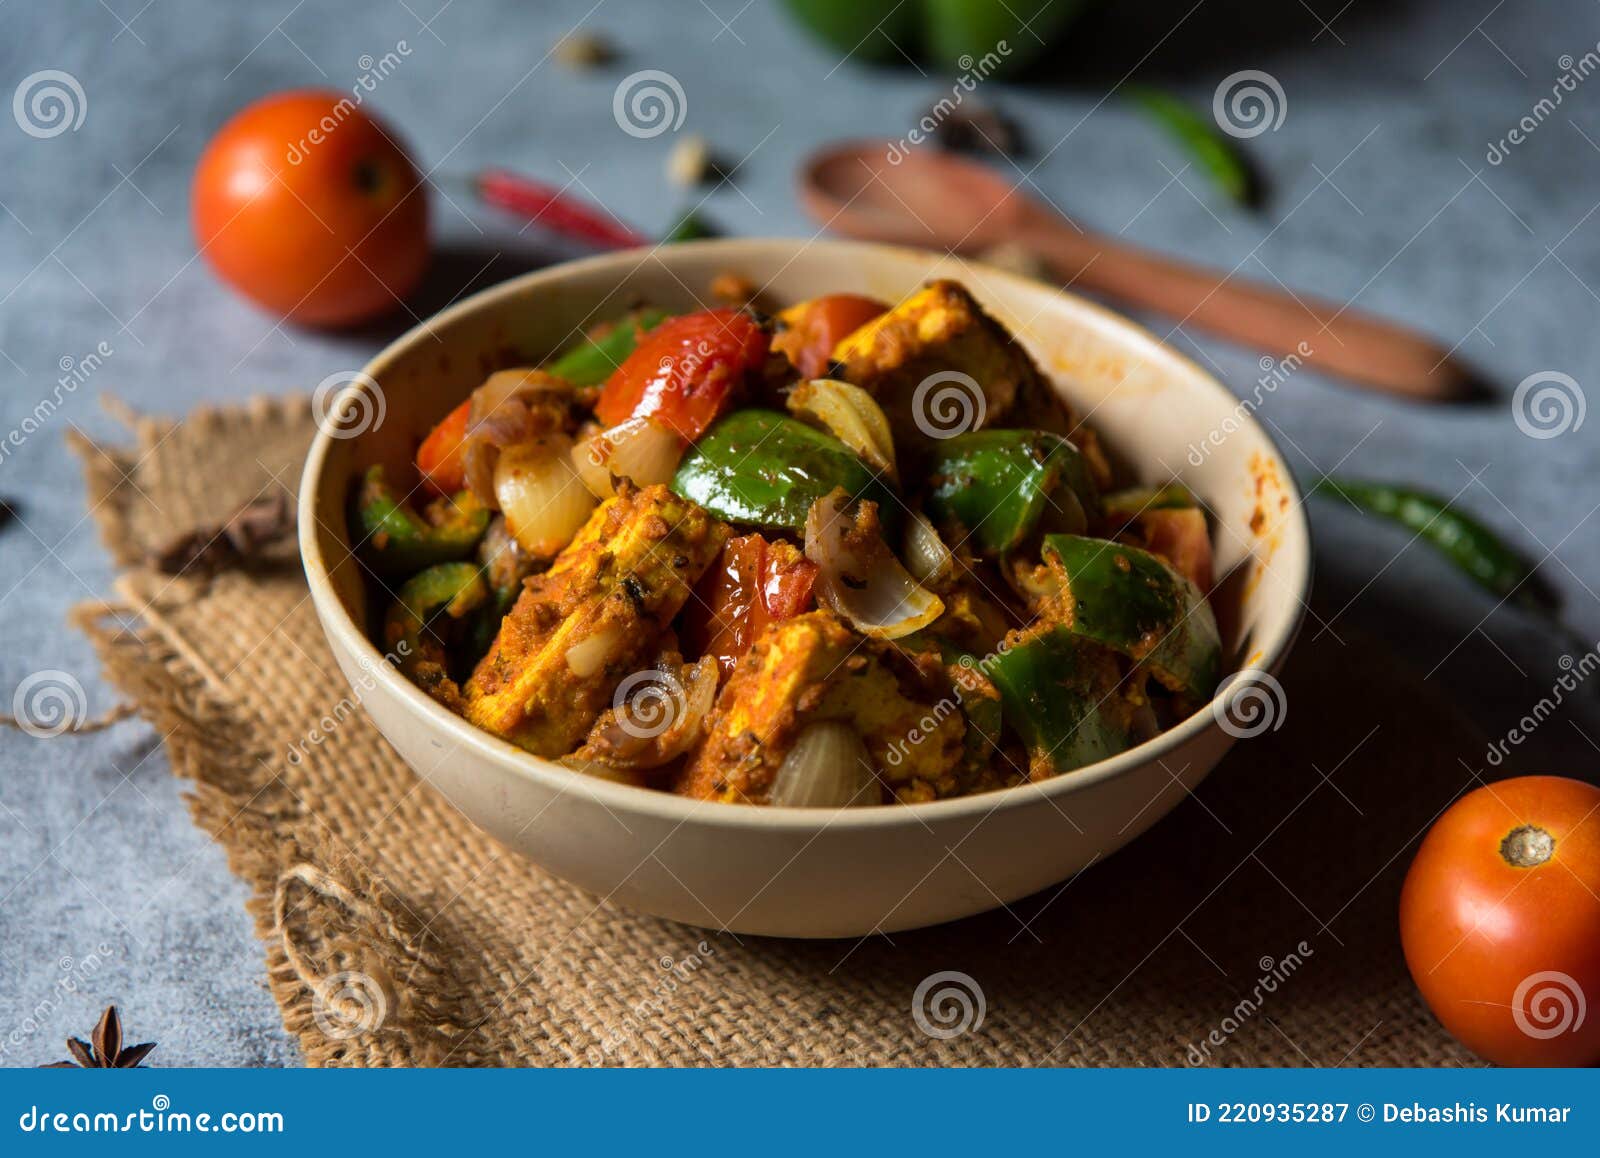 https://thumbs.dreamstime.com/z/close-up-kadai-paneer-popular-north-indian-semi-dry-dish-made-cooking-paneer-close-up-kadai-paneer-popular-north-220935287.jpg